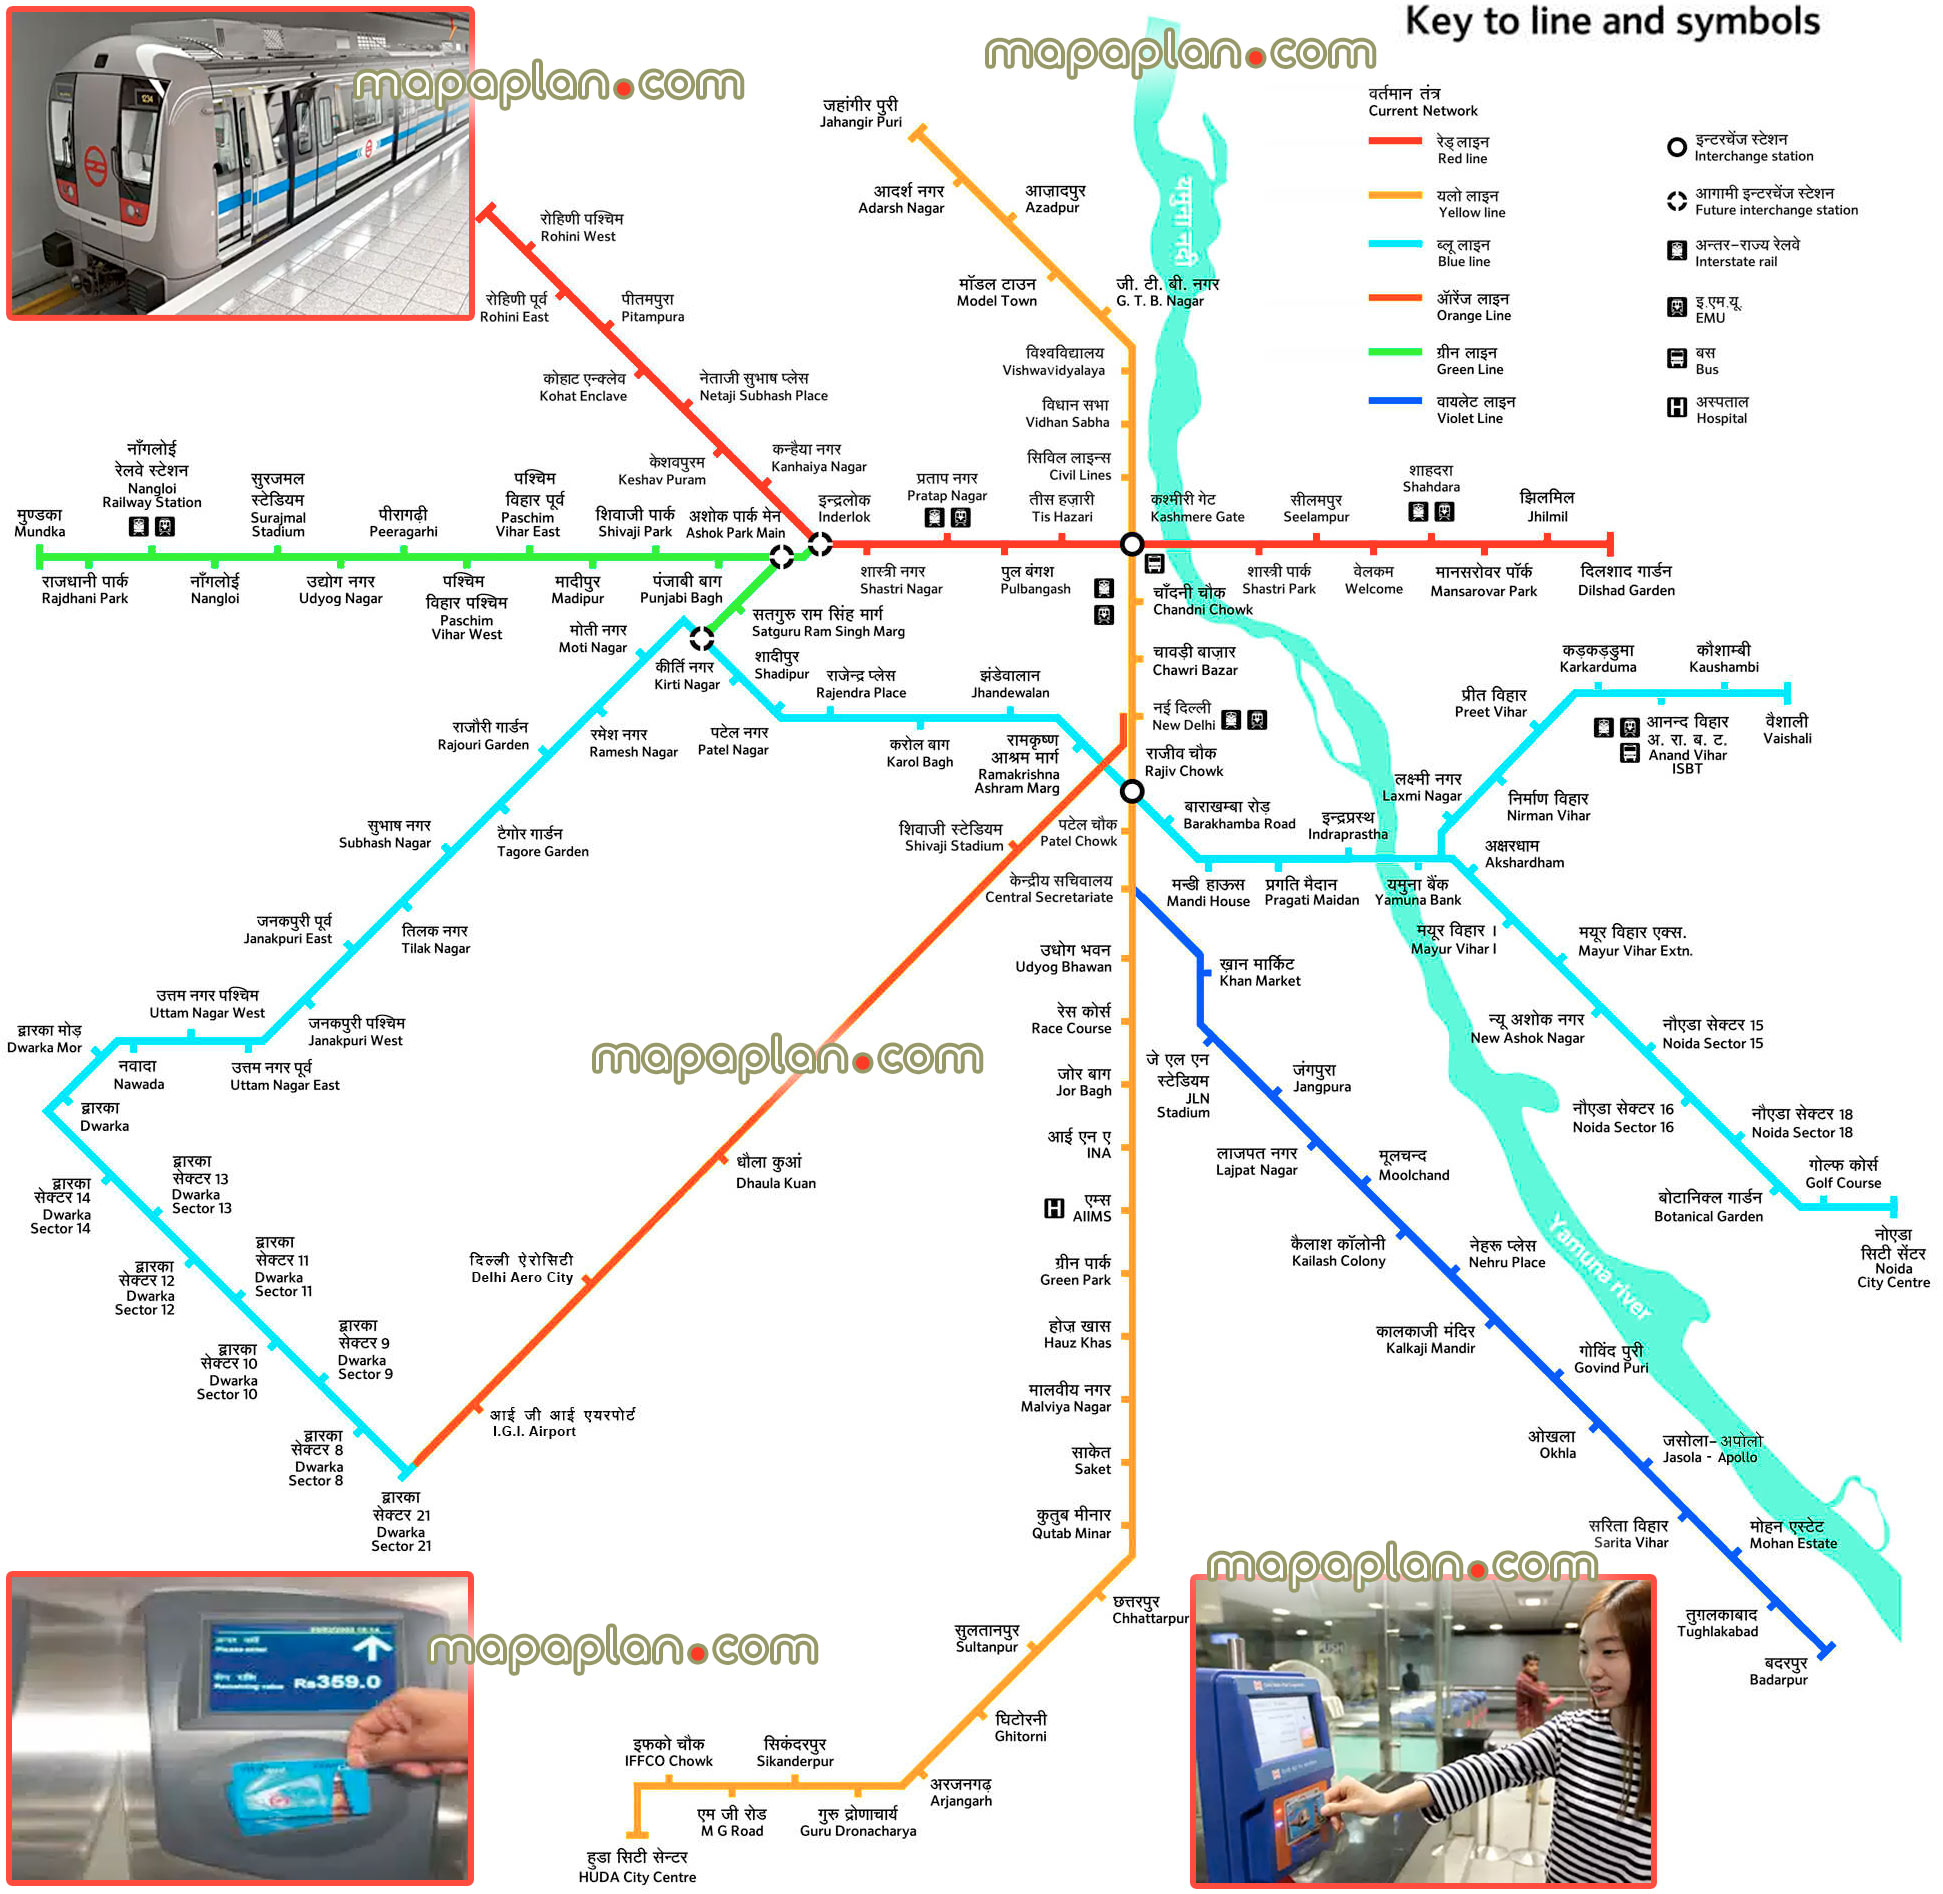 delhi metro lines stations public transport rail system transit diagram english hindi updated network plan city train routes bus stops regional local railway interchangess Delhi Top tourist attractions map